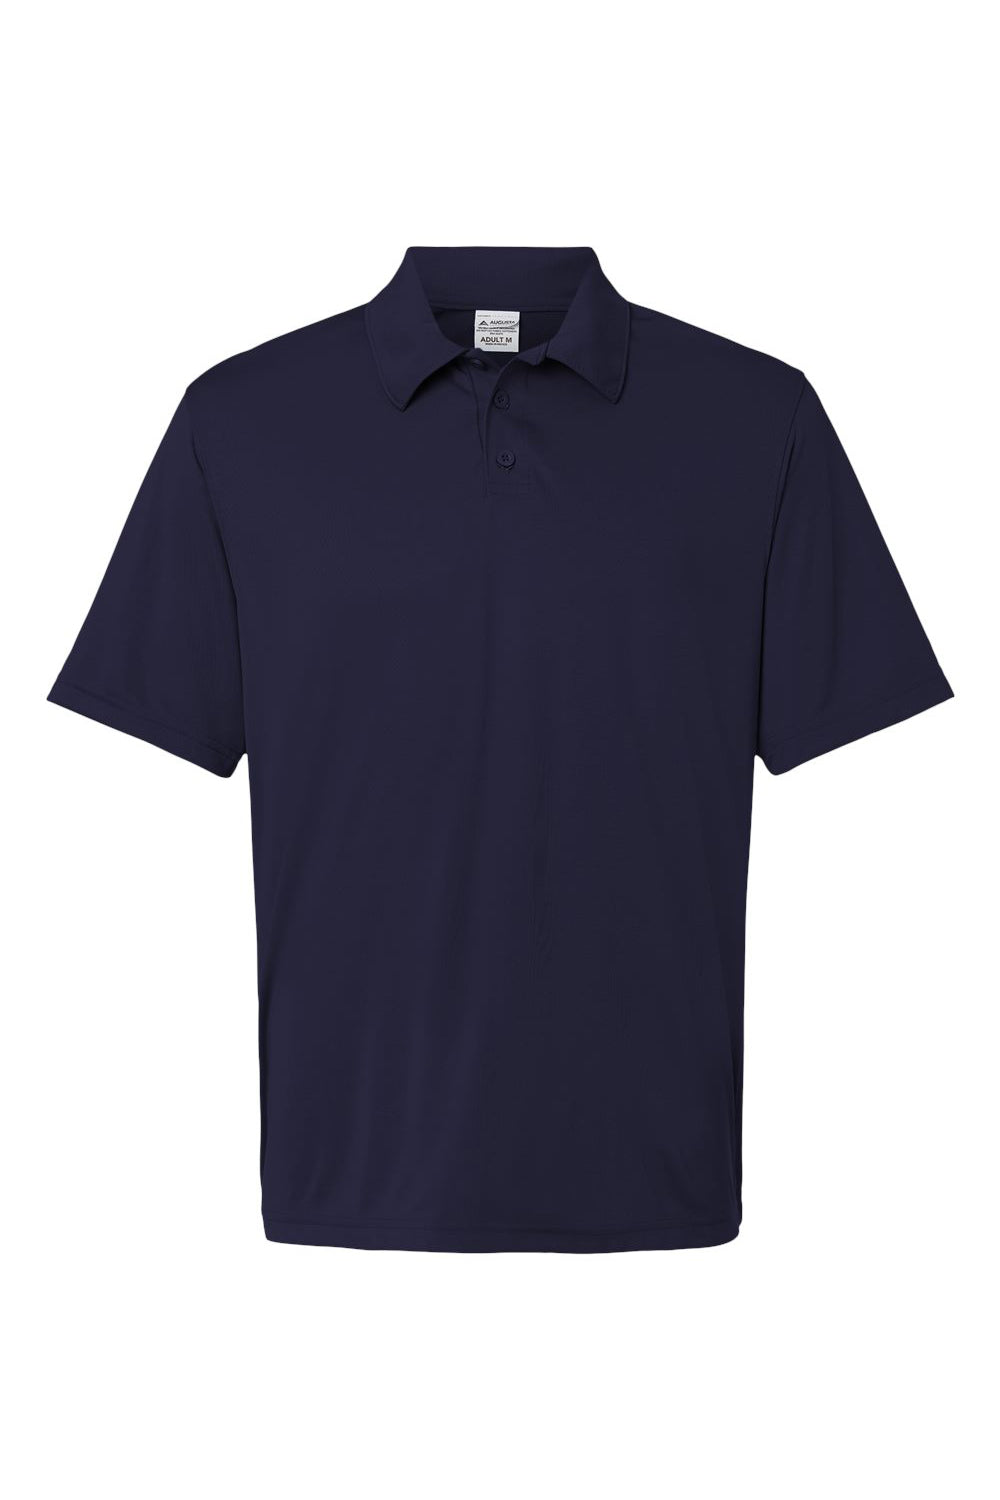 Augusta Sportswear 5017 Mens Vital Moisture Wicking Short Sleeve Polo Shirt Navy Blue Flat Front